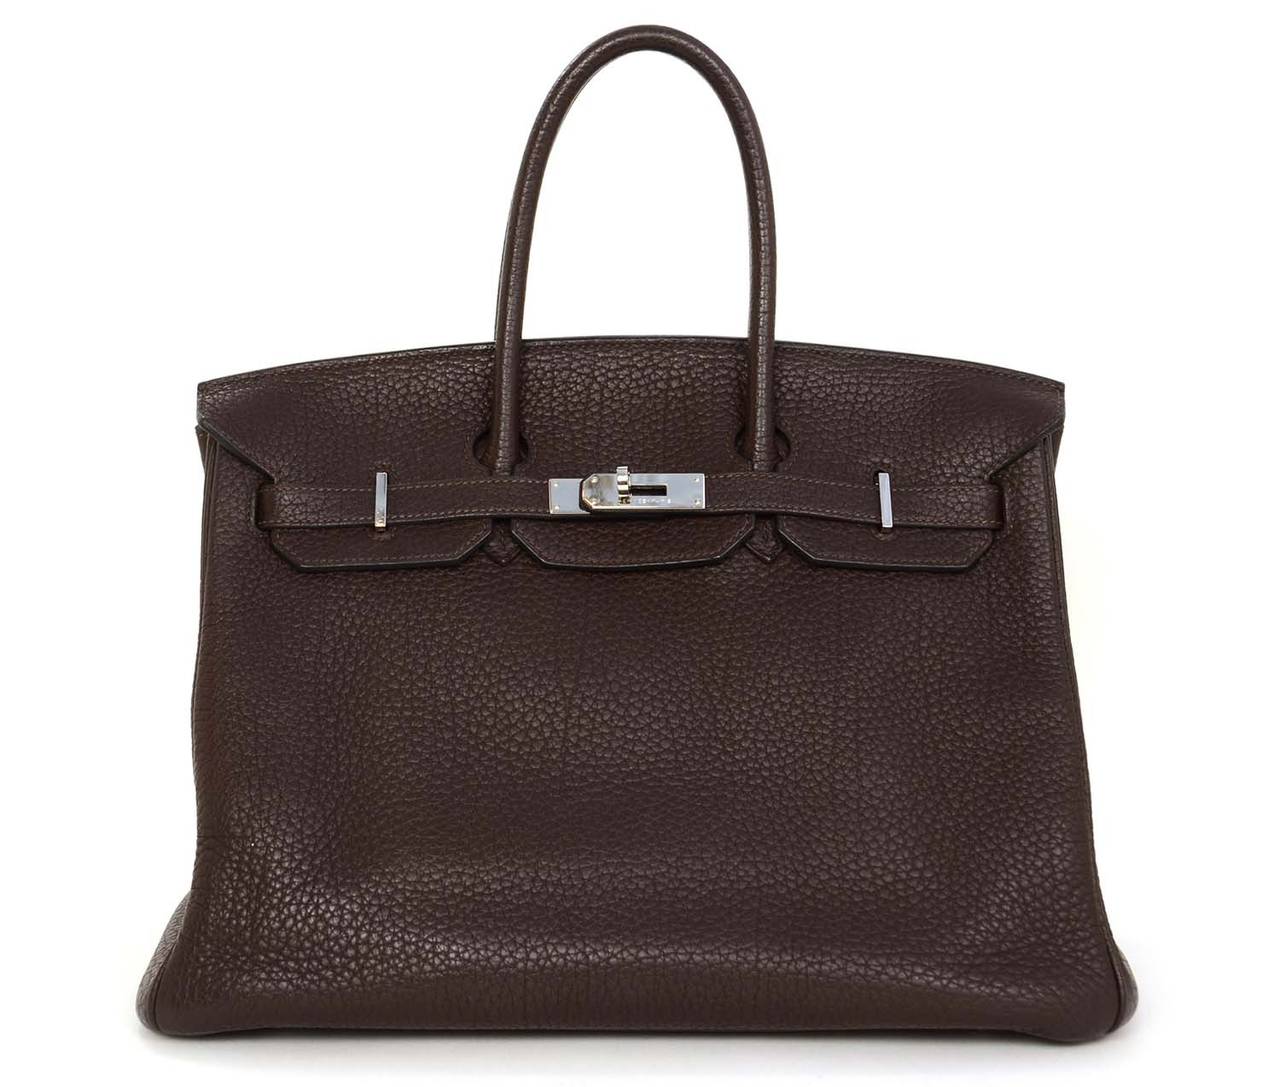 great hermes handbags - HERMES 2009 Brown Togo Leather 35cm Birkin Bag PHW For Sale at 1stdibs